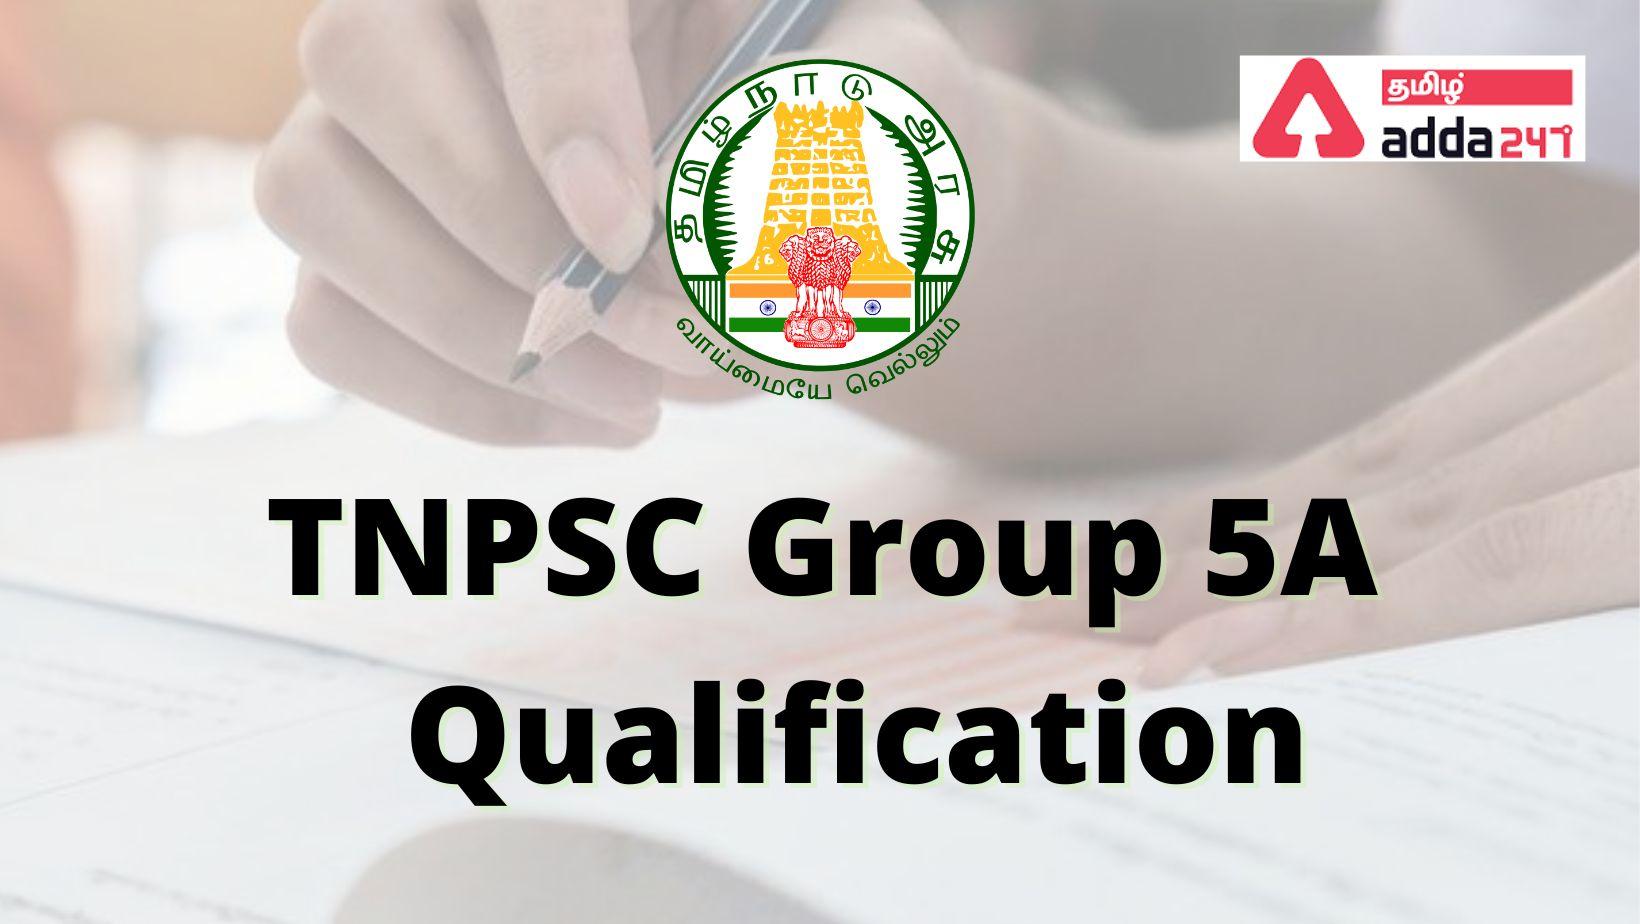 TNPSC Group 5A Qualification